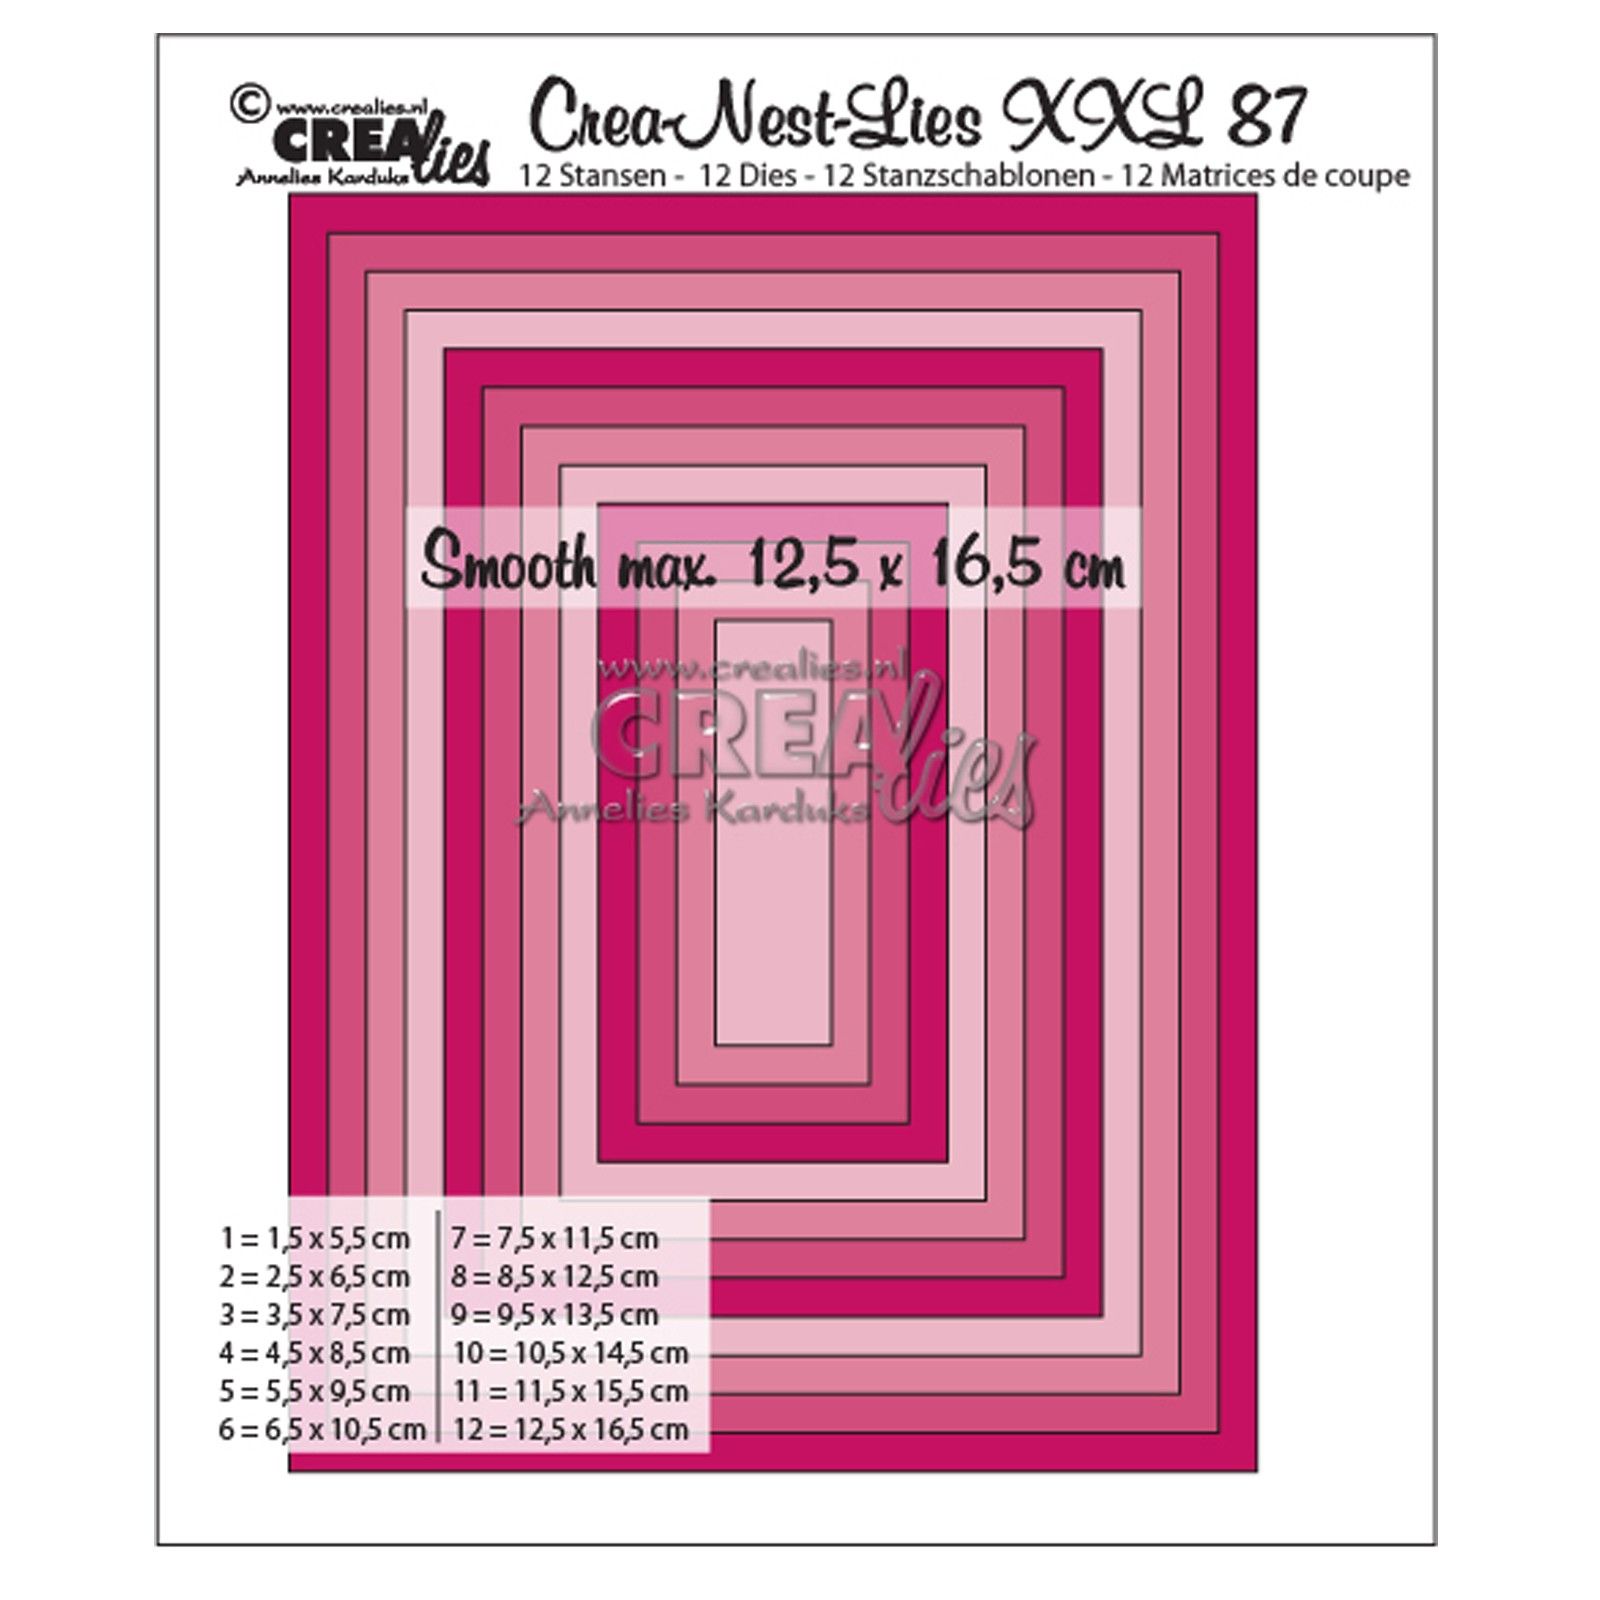 Crealies Crea-Nest-Lies Dies - XXL87 gladde rechthoeken halve cm 12,5x16,5 cm